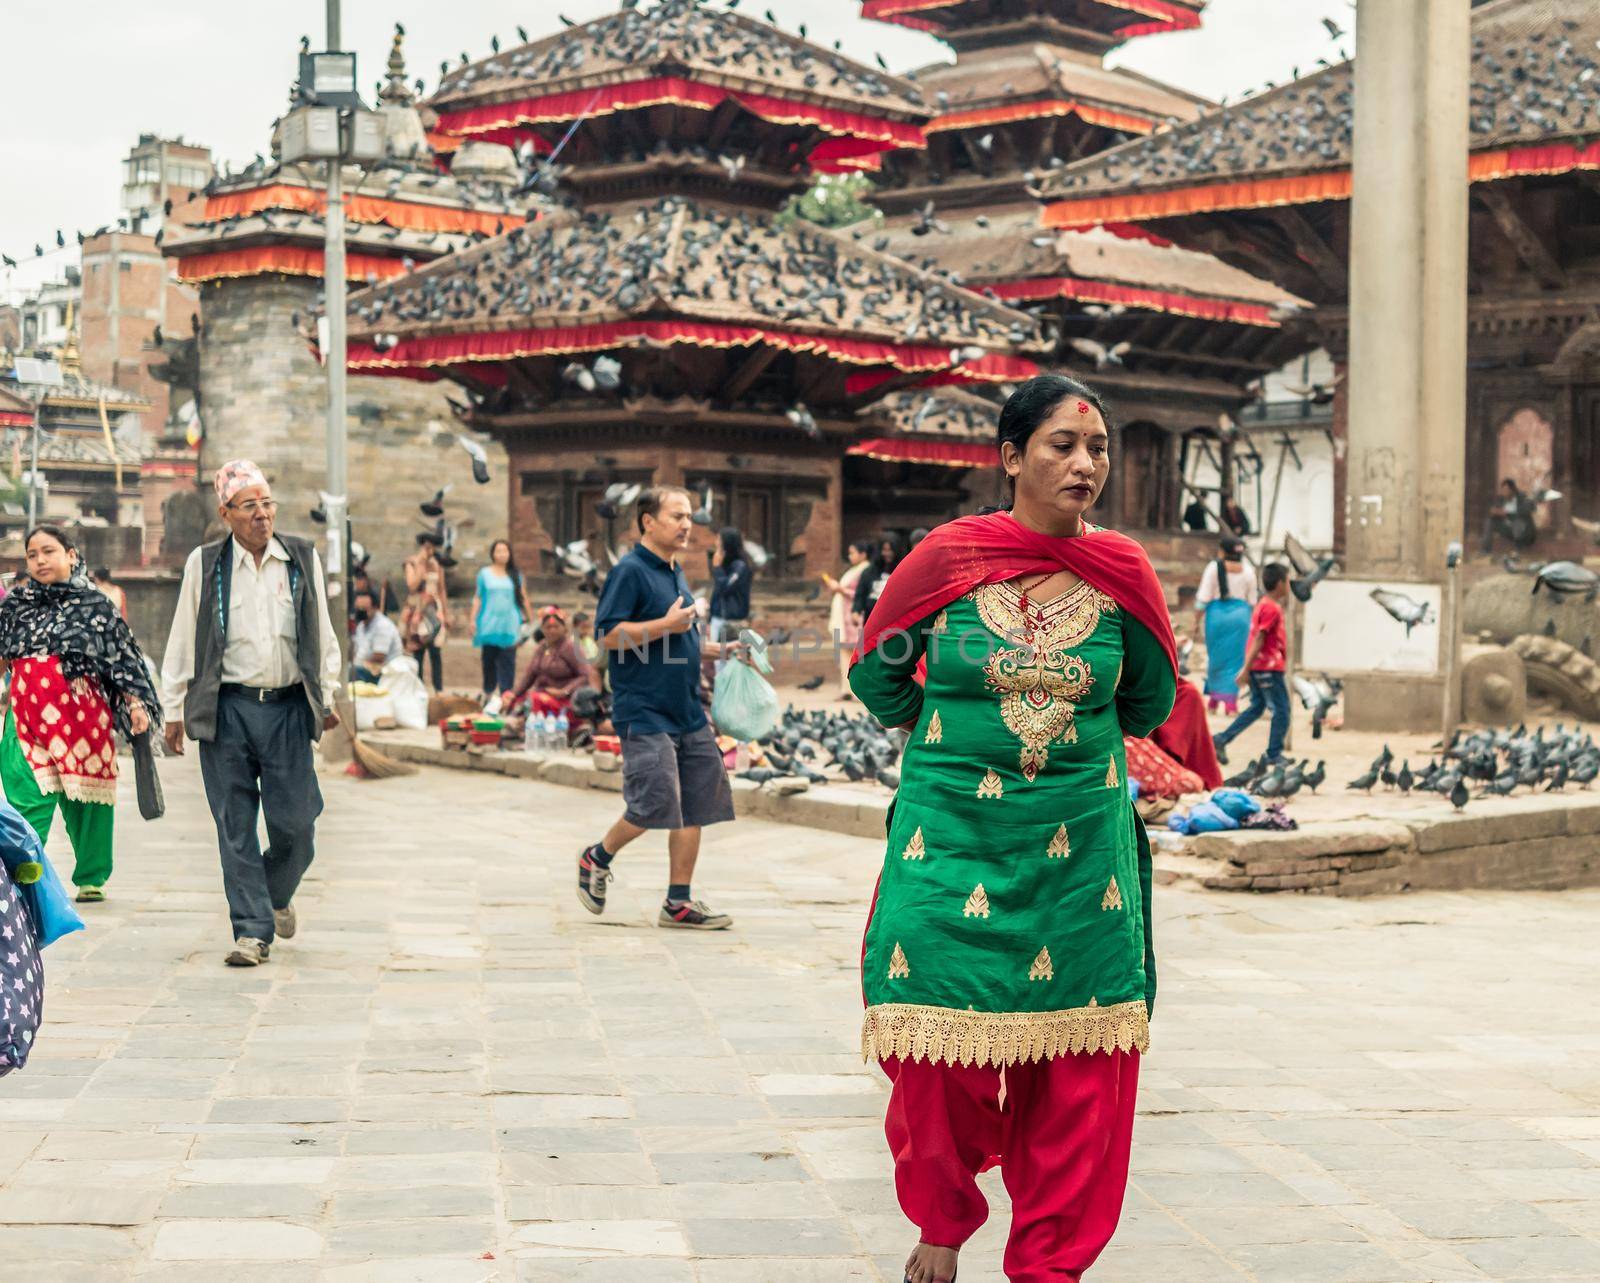 KATHMANDU - OCTOBER 05: People walking at Durbar Square in Kathmandu, Nepal, October 05, 2017